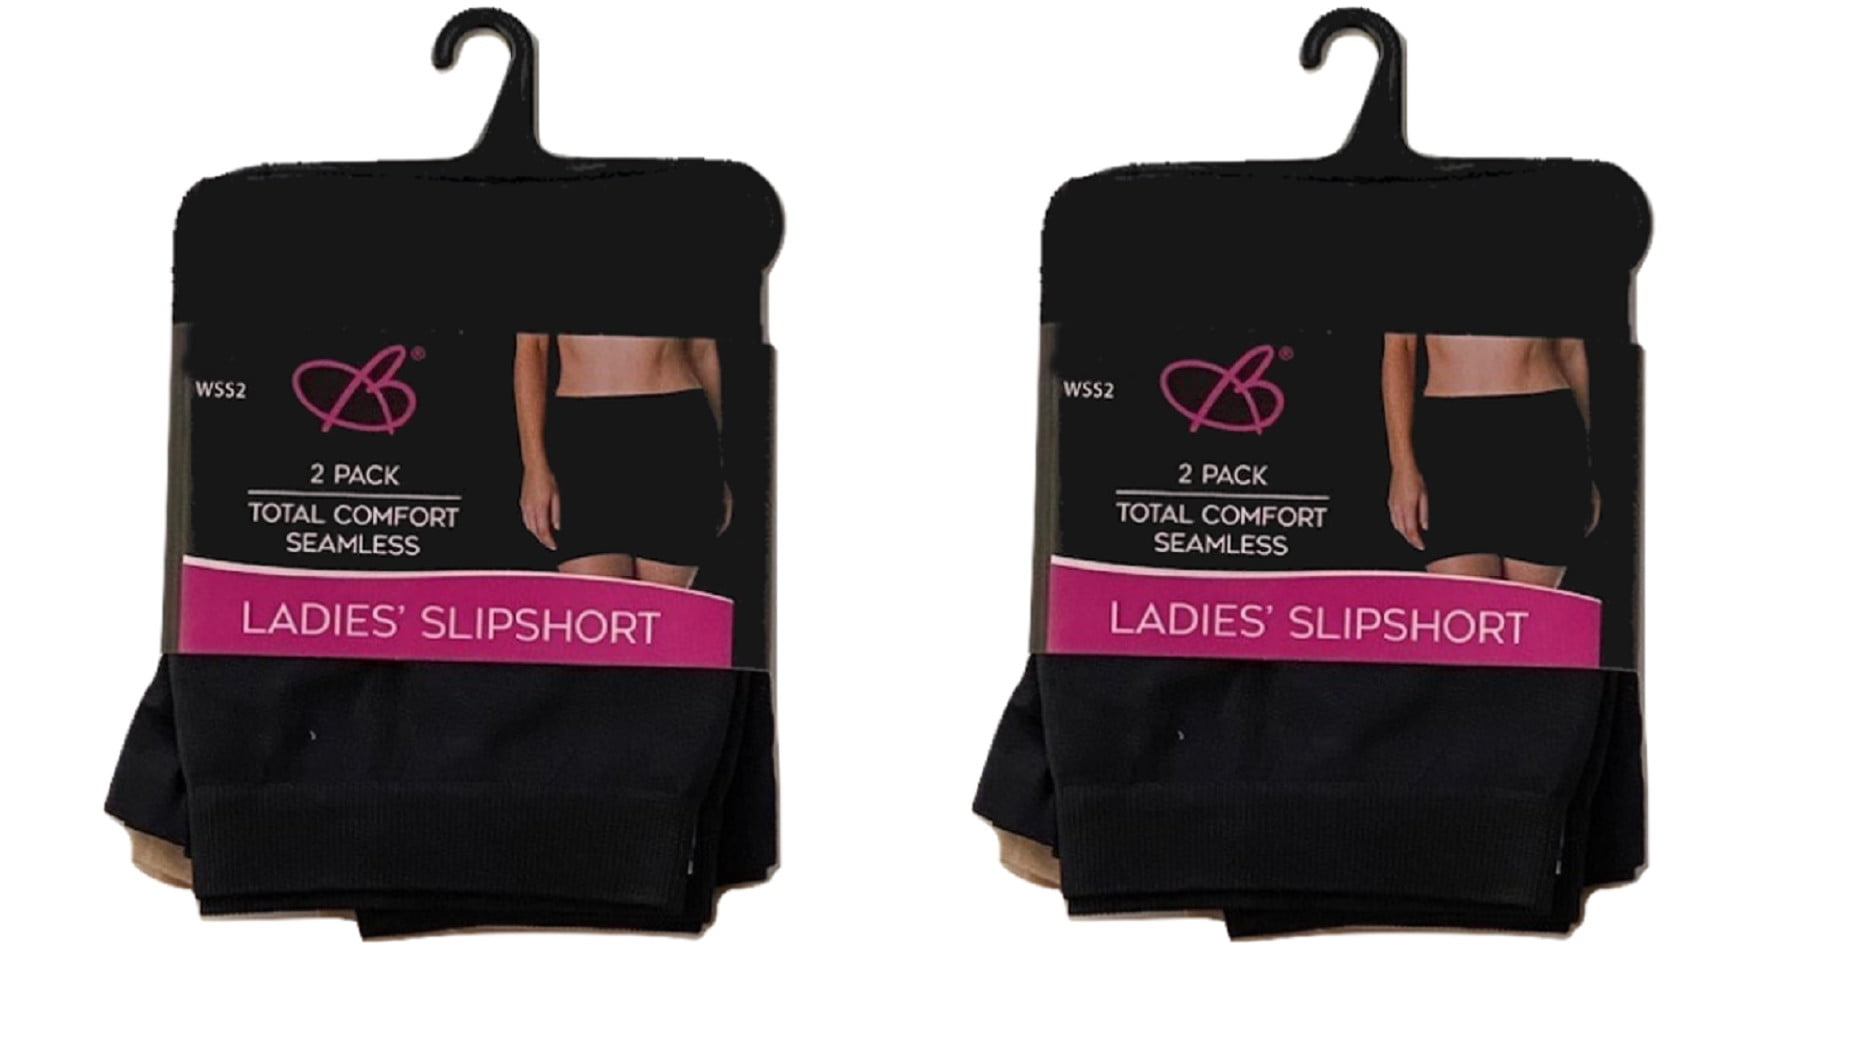 2 pack Bobbie Brooks Ladies Slipshorts, Black/Sand, 2X/3X